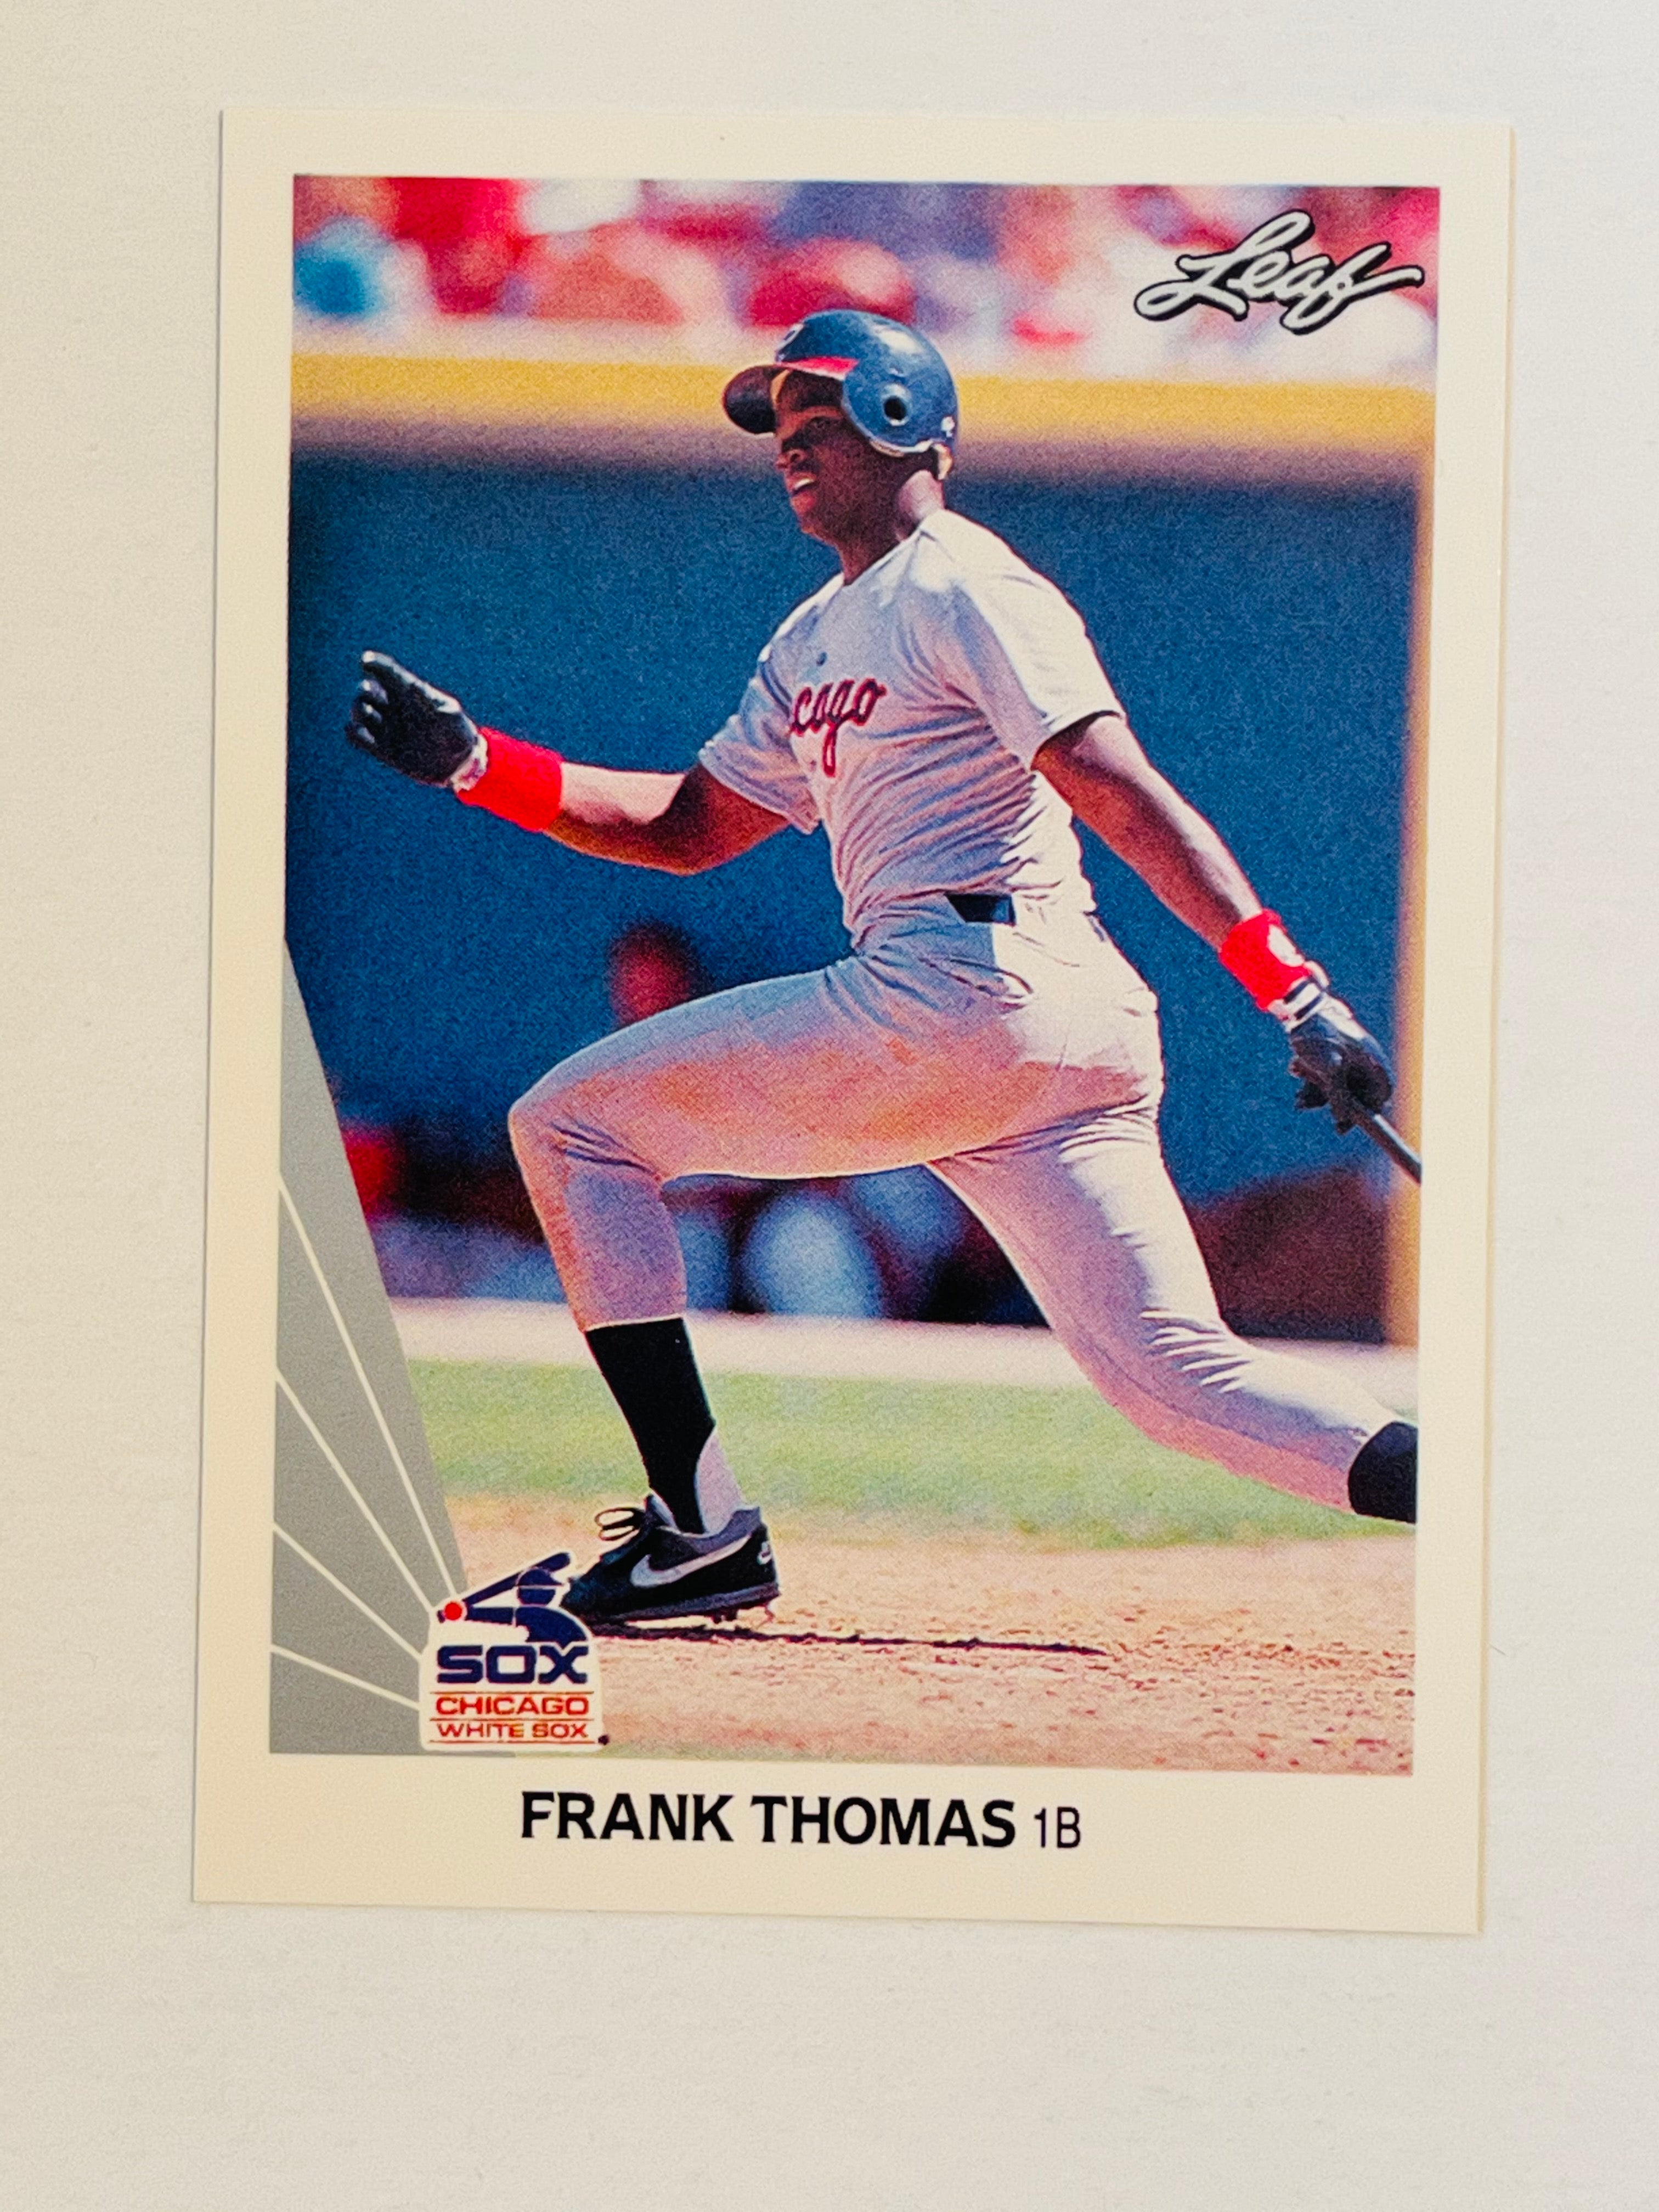 Frank Thomas Leaf baseball high grade rookie card 1990